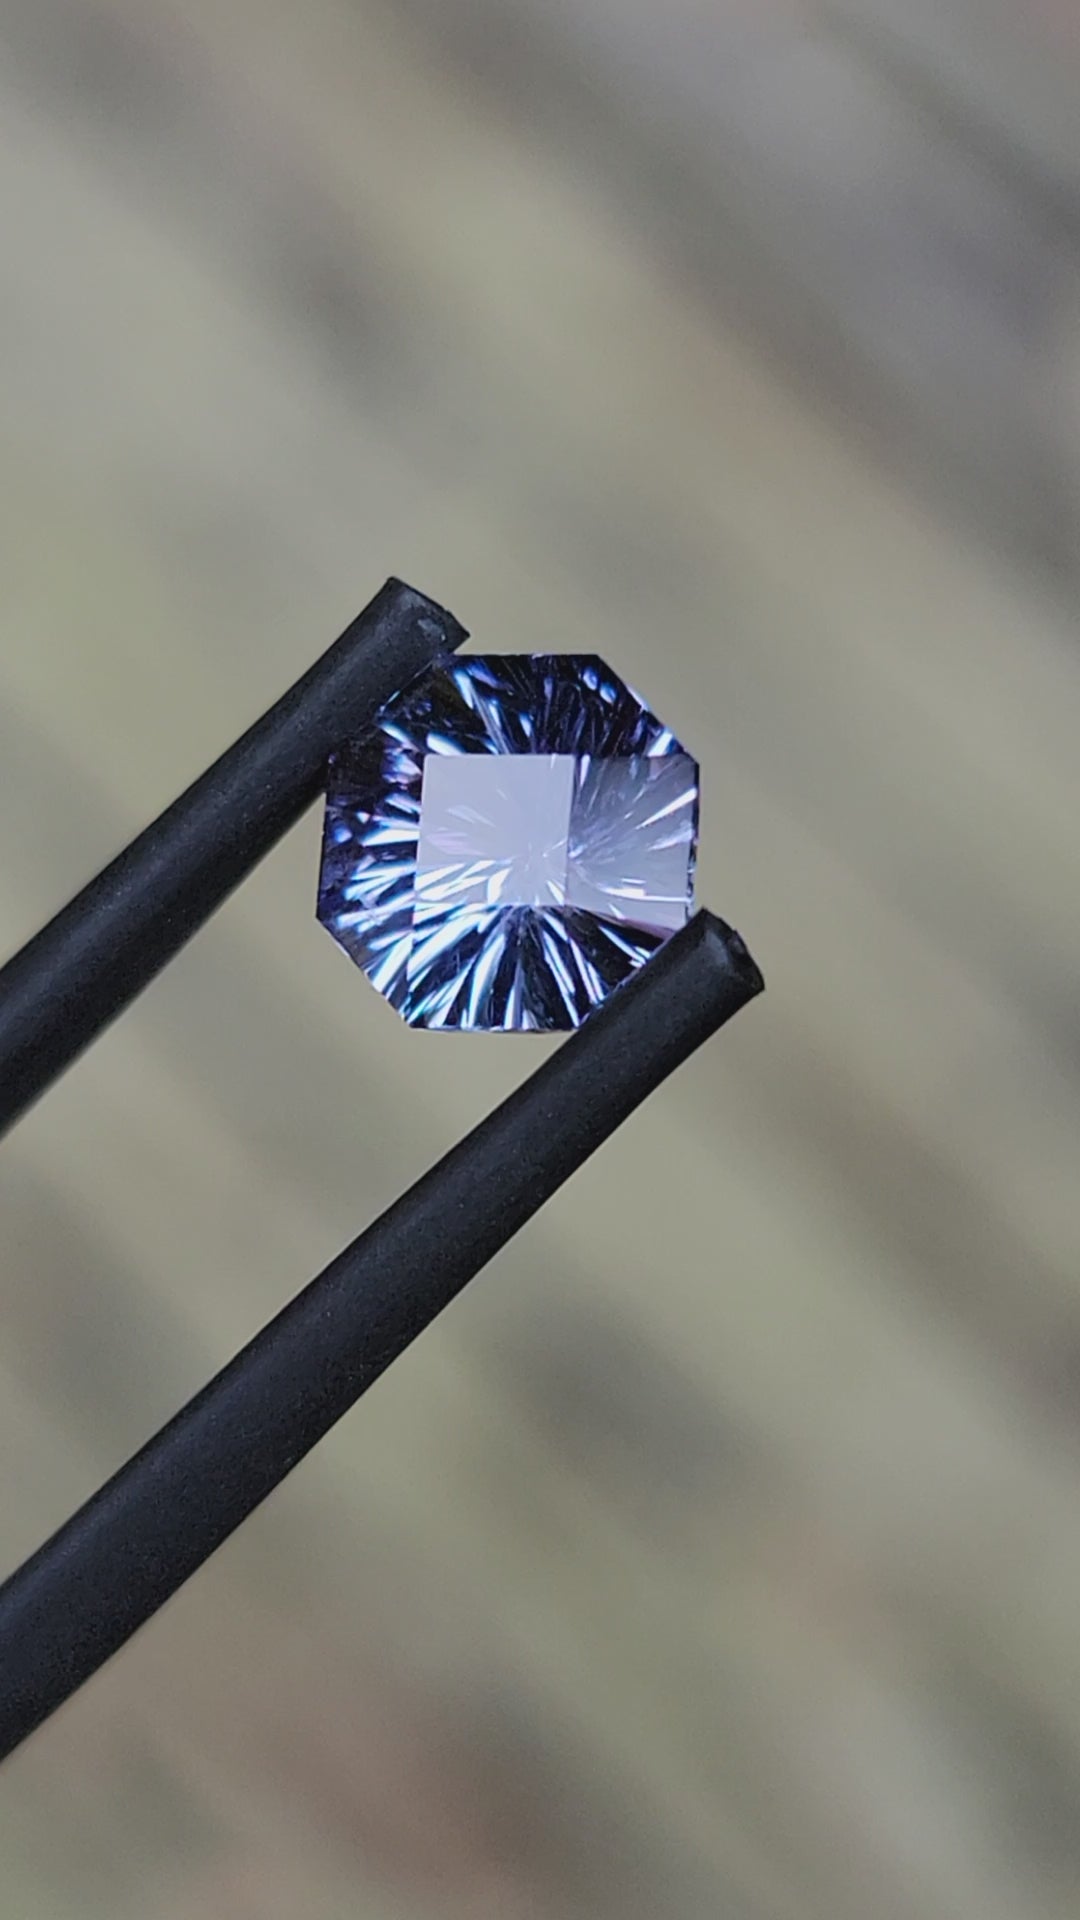 7.2mm Bluish Violet Tanzanite Octagon - 1.38 carats, 7.2x7.7mm - Fantasy Cut